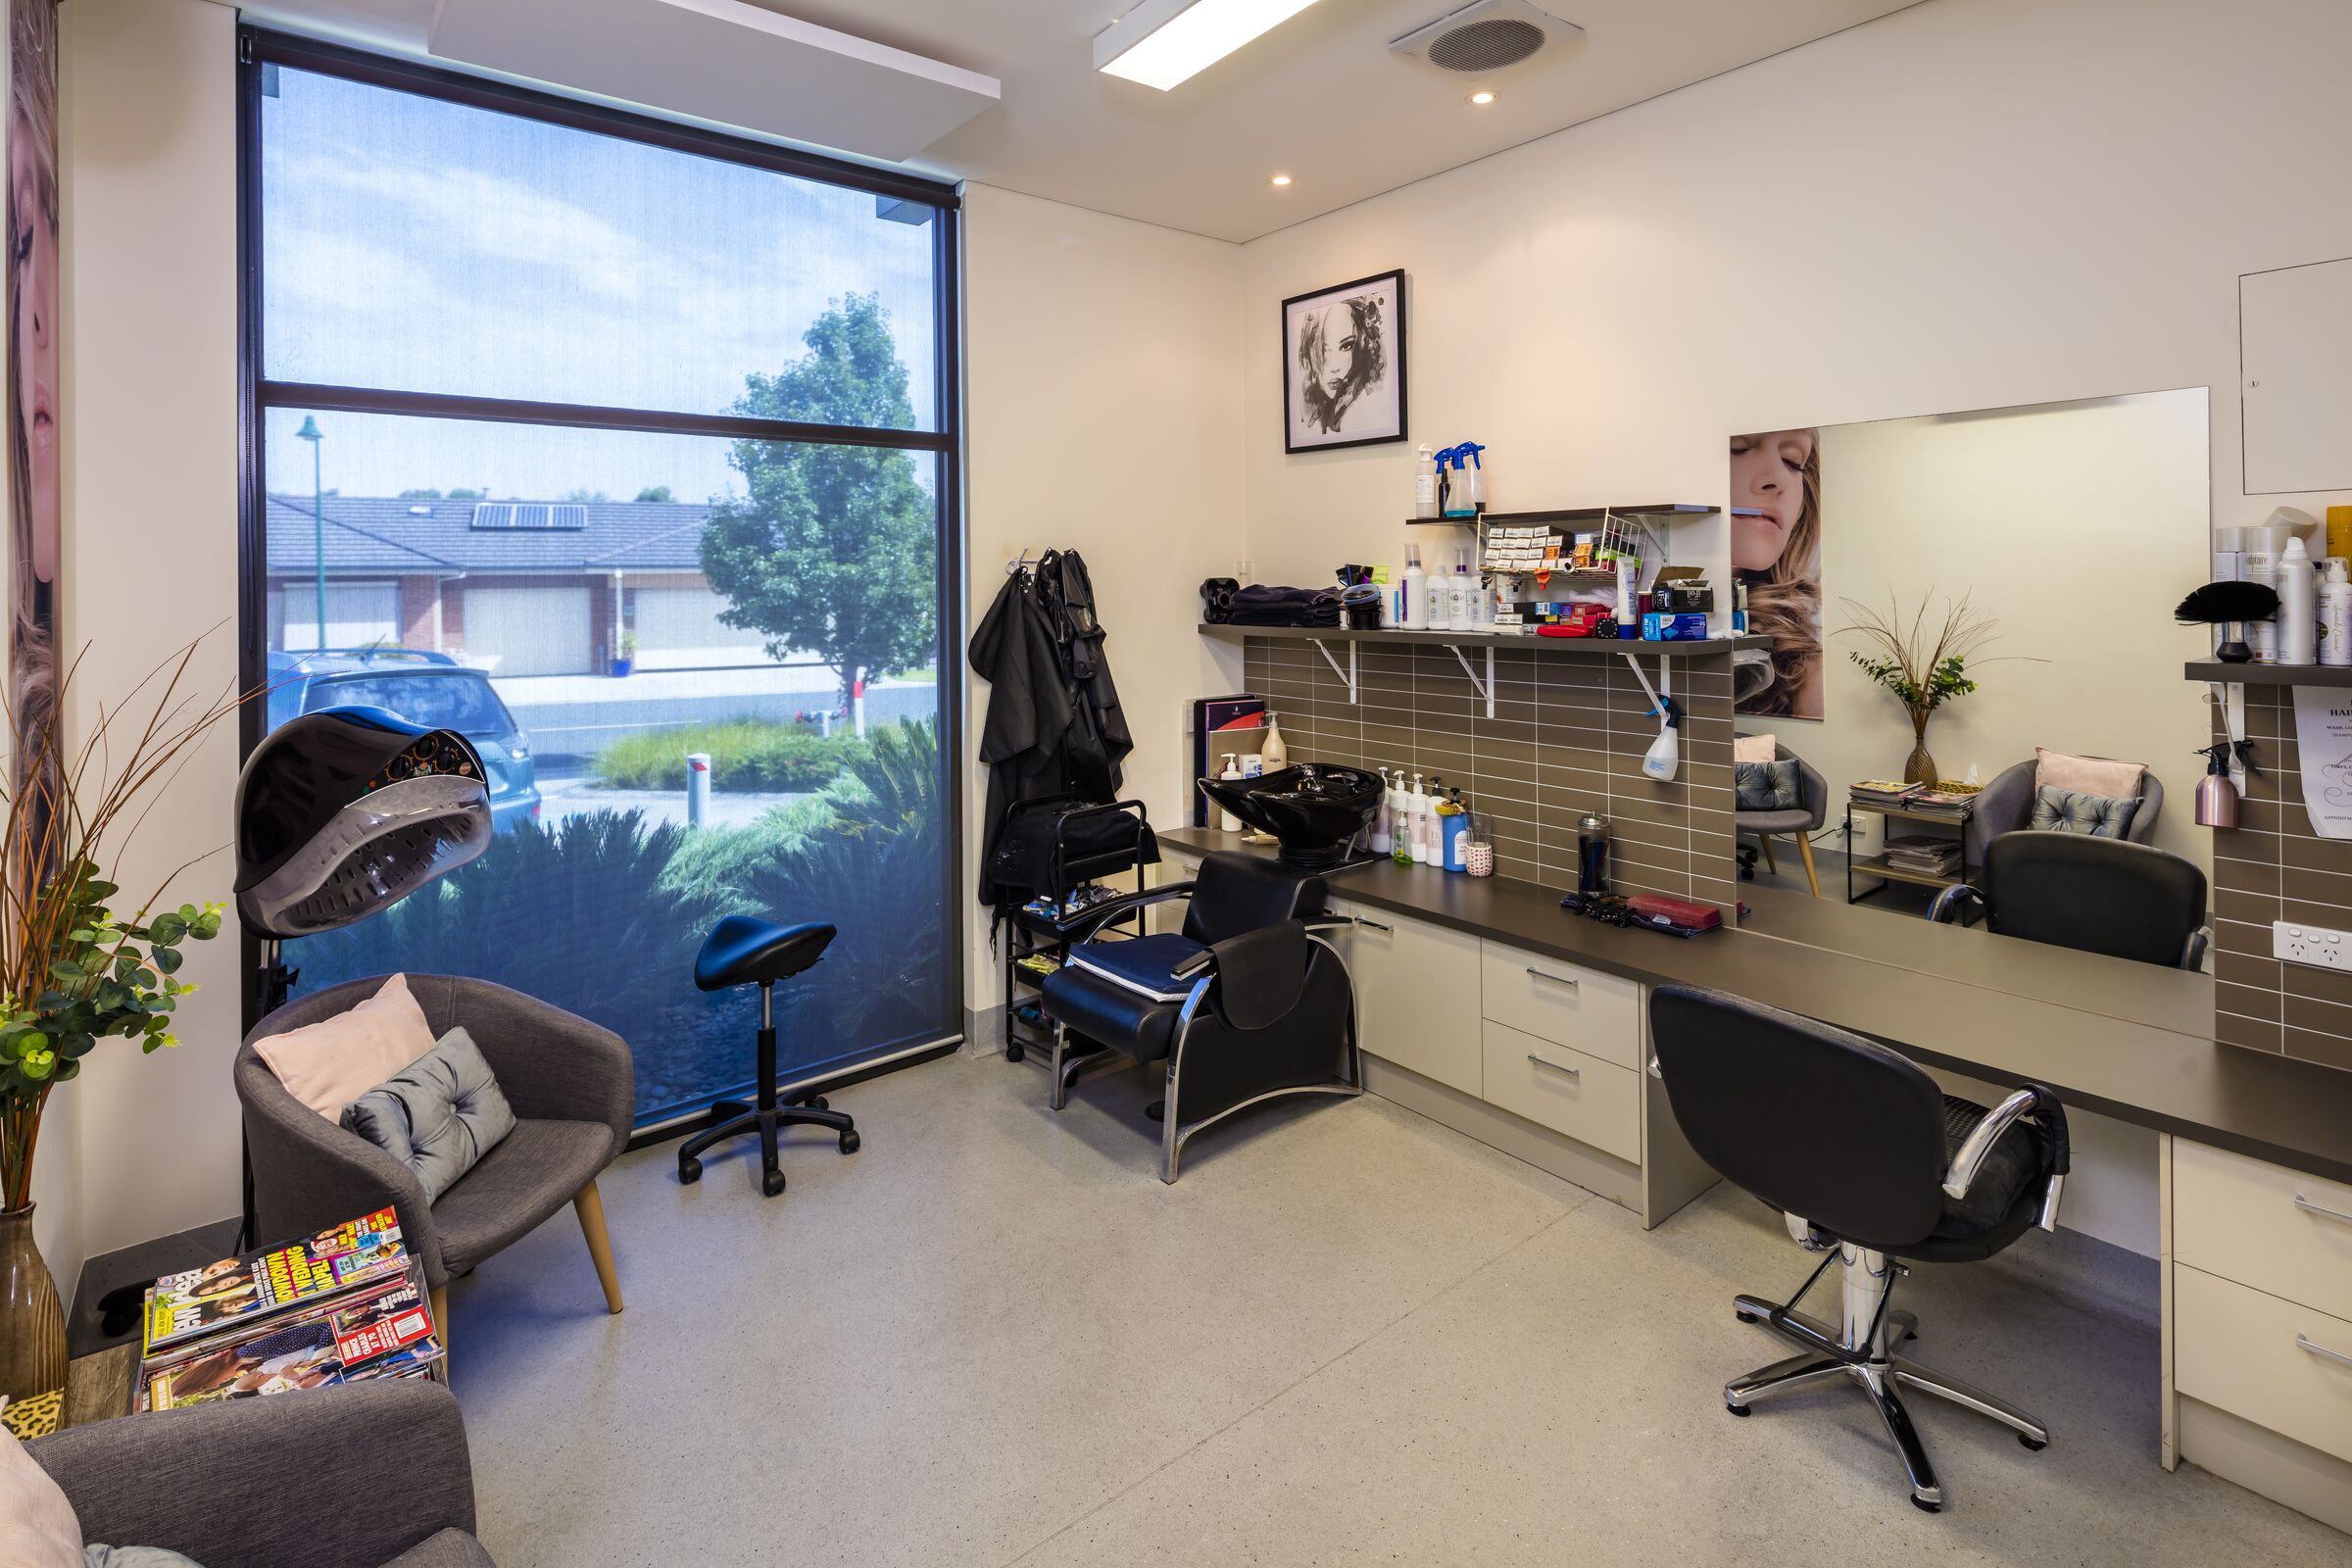 Waterford Park hairdressing salon/barber